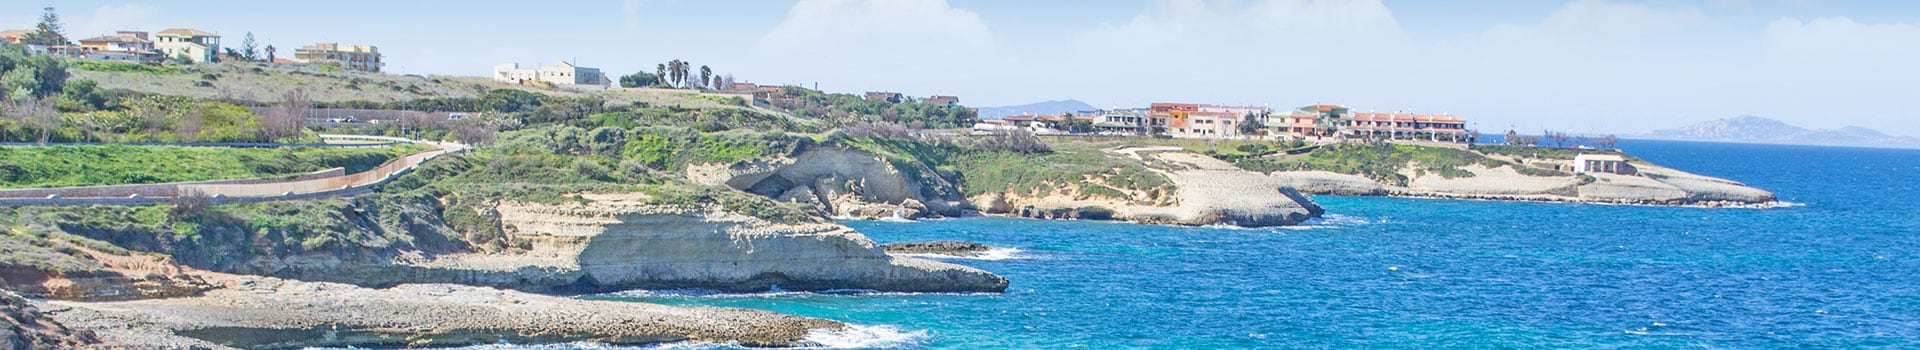 Billetes de Barco de Malta a Porto Torres (Cerdeña)